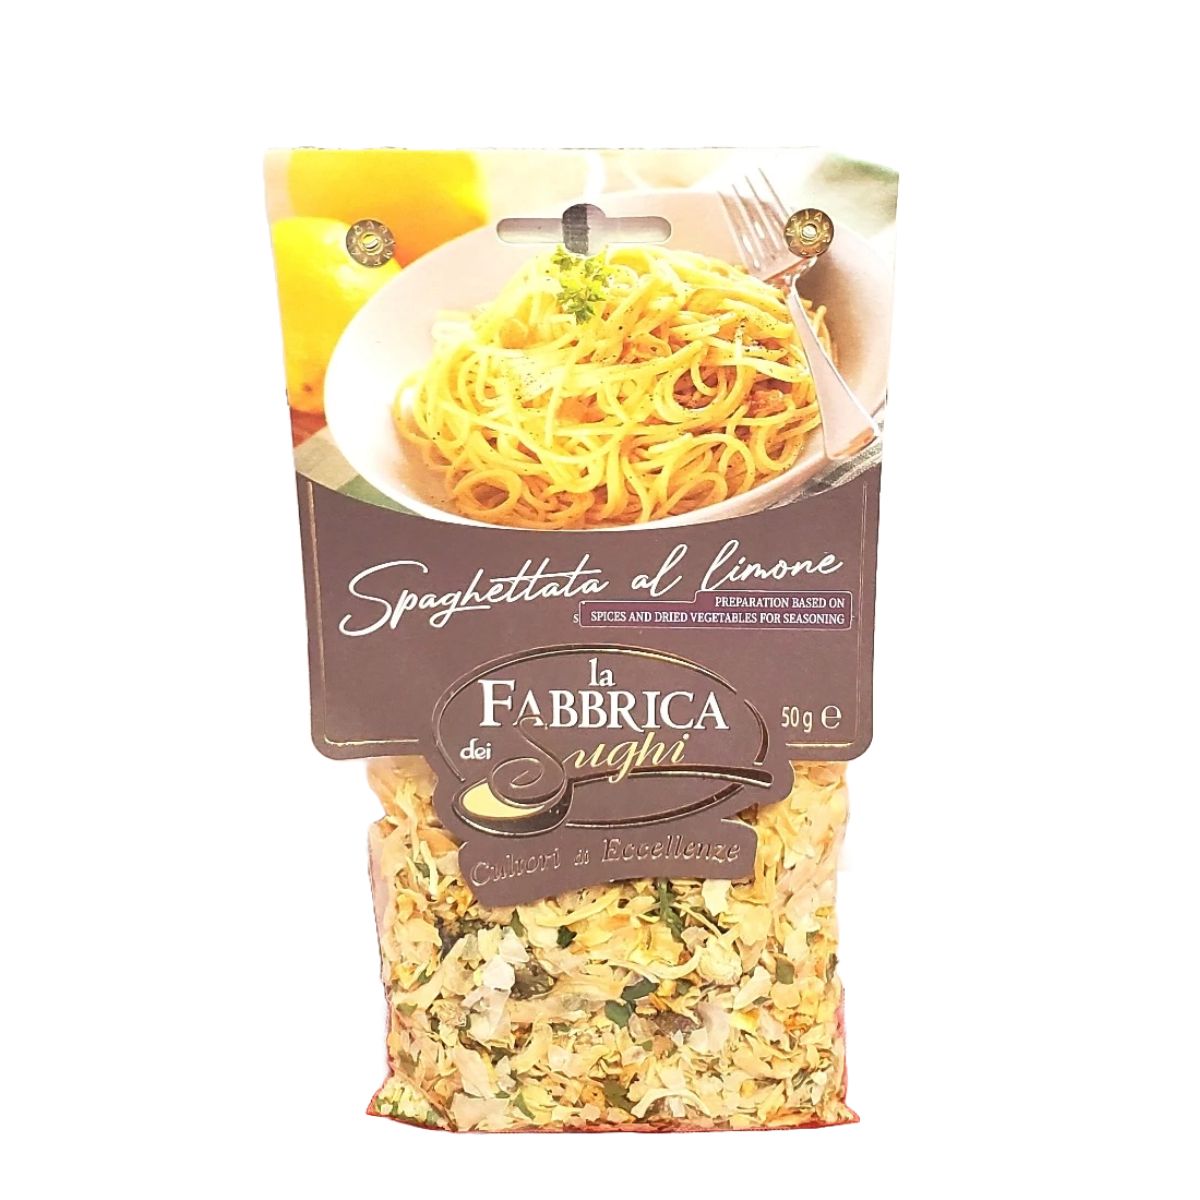 Spaghettata al Limone Seasoning Mix by La Fabbrica